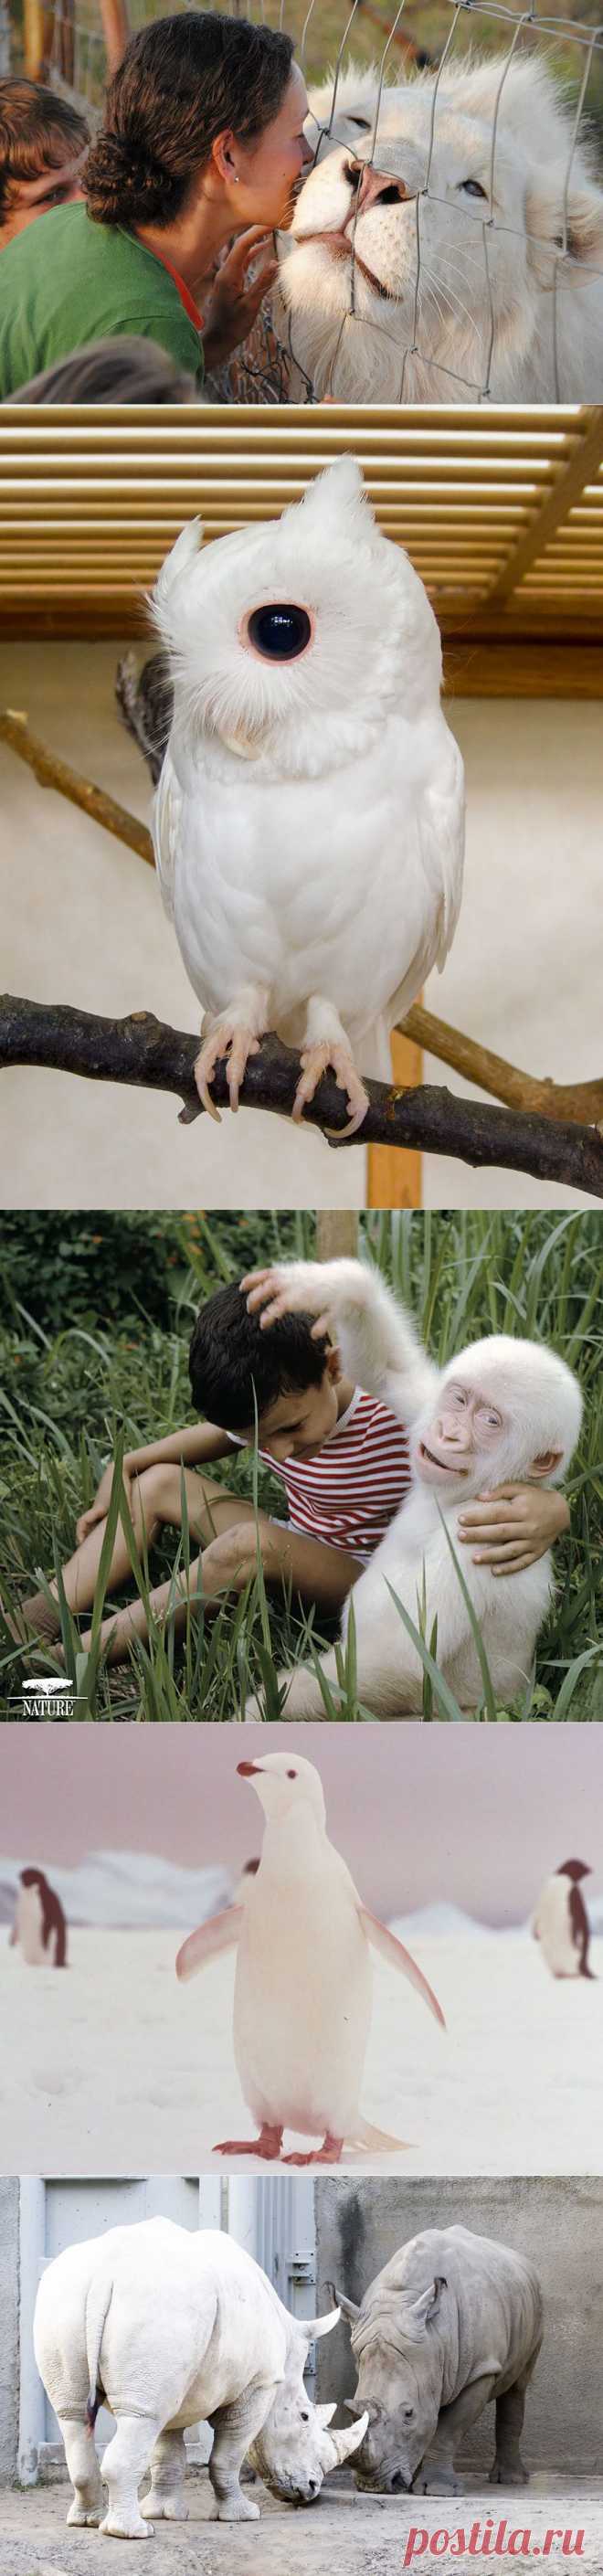 21 шикарный кадр с животными-альбиносами | Дай лапку